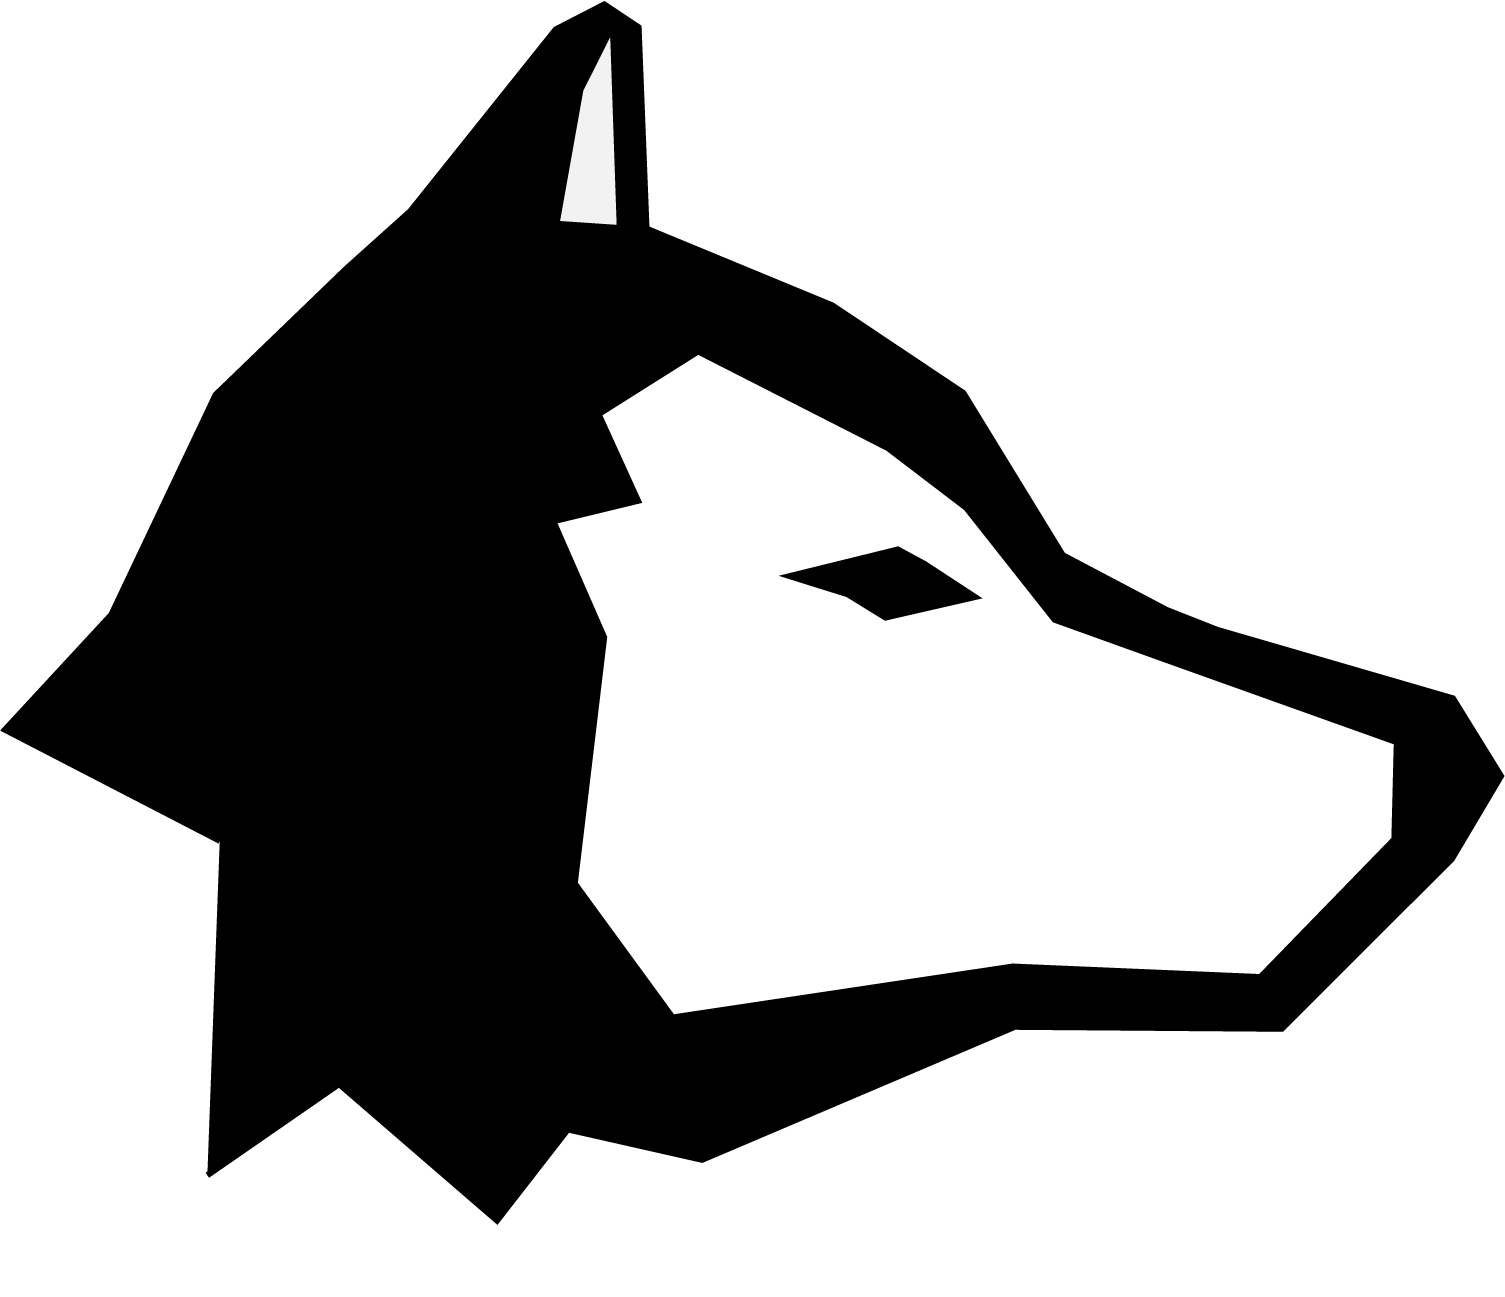 Company logo, husky